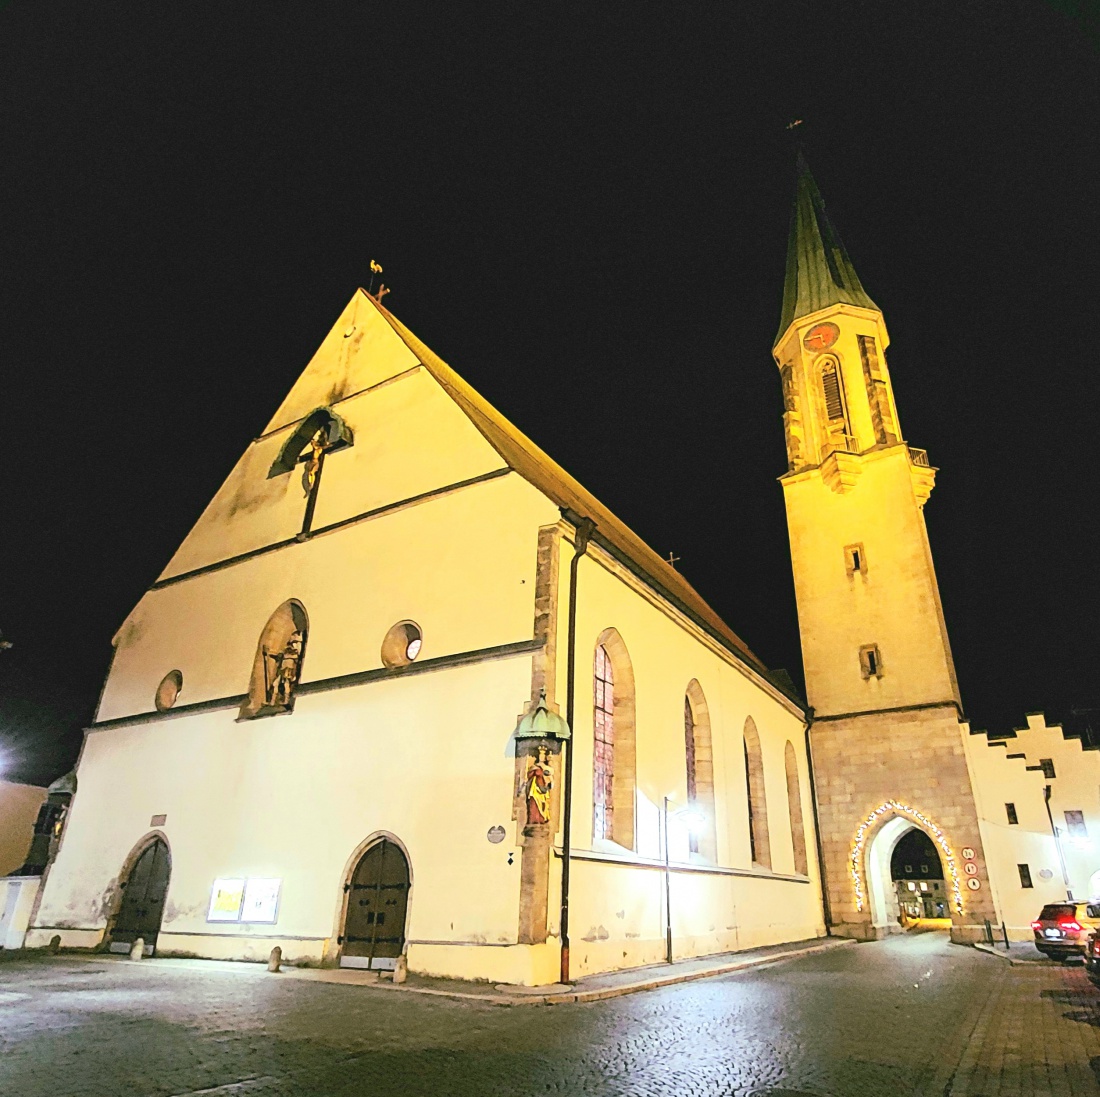 Foto: Martin Zehrer - Kemnather Kirche mit Turm... 